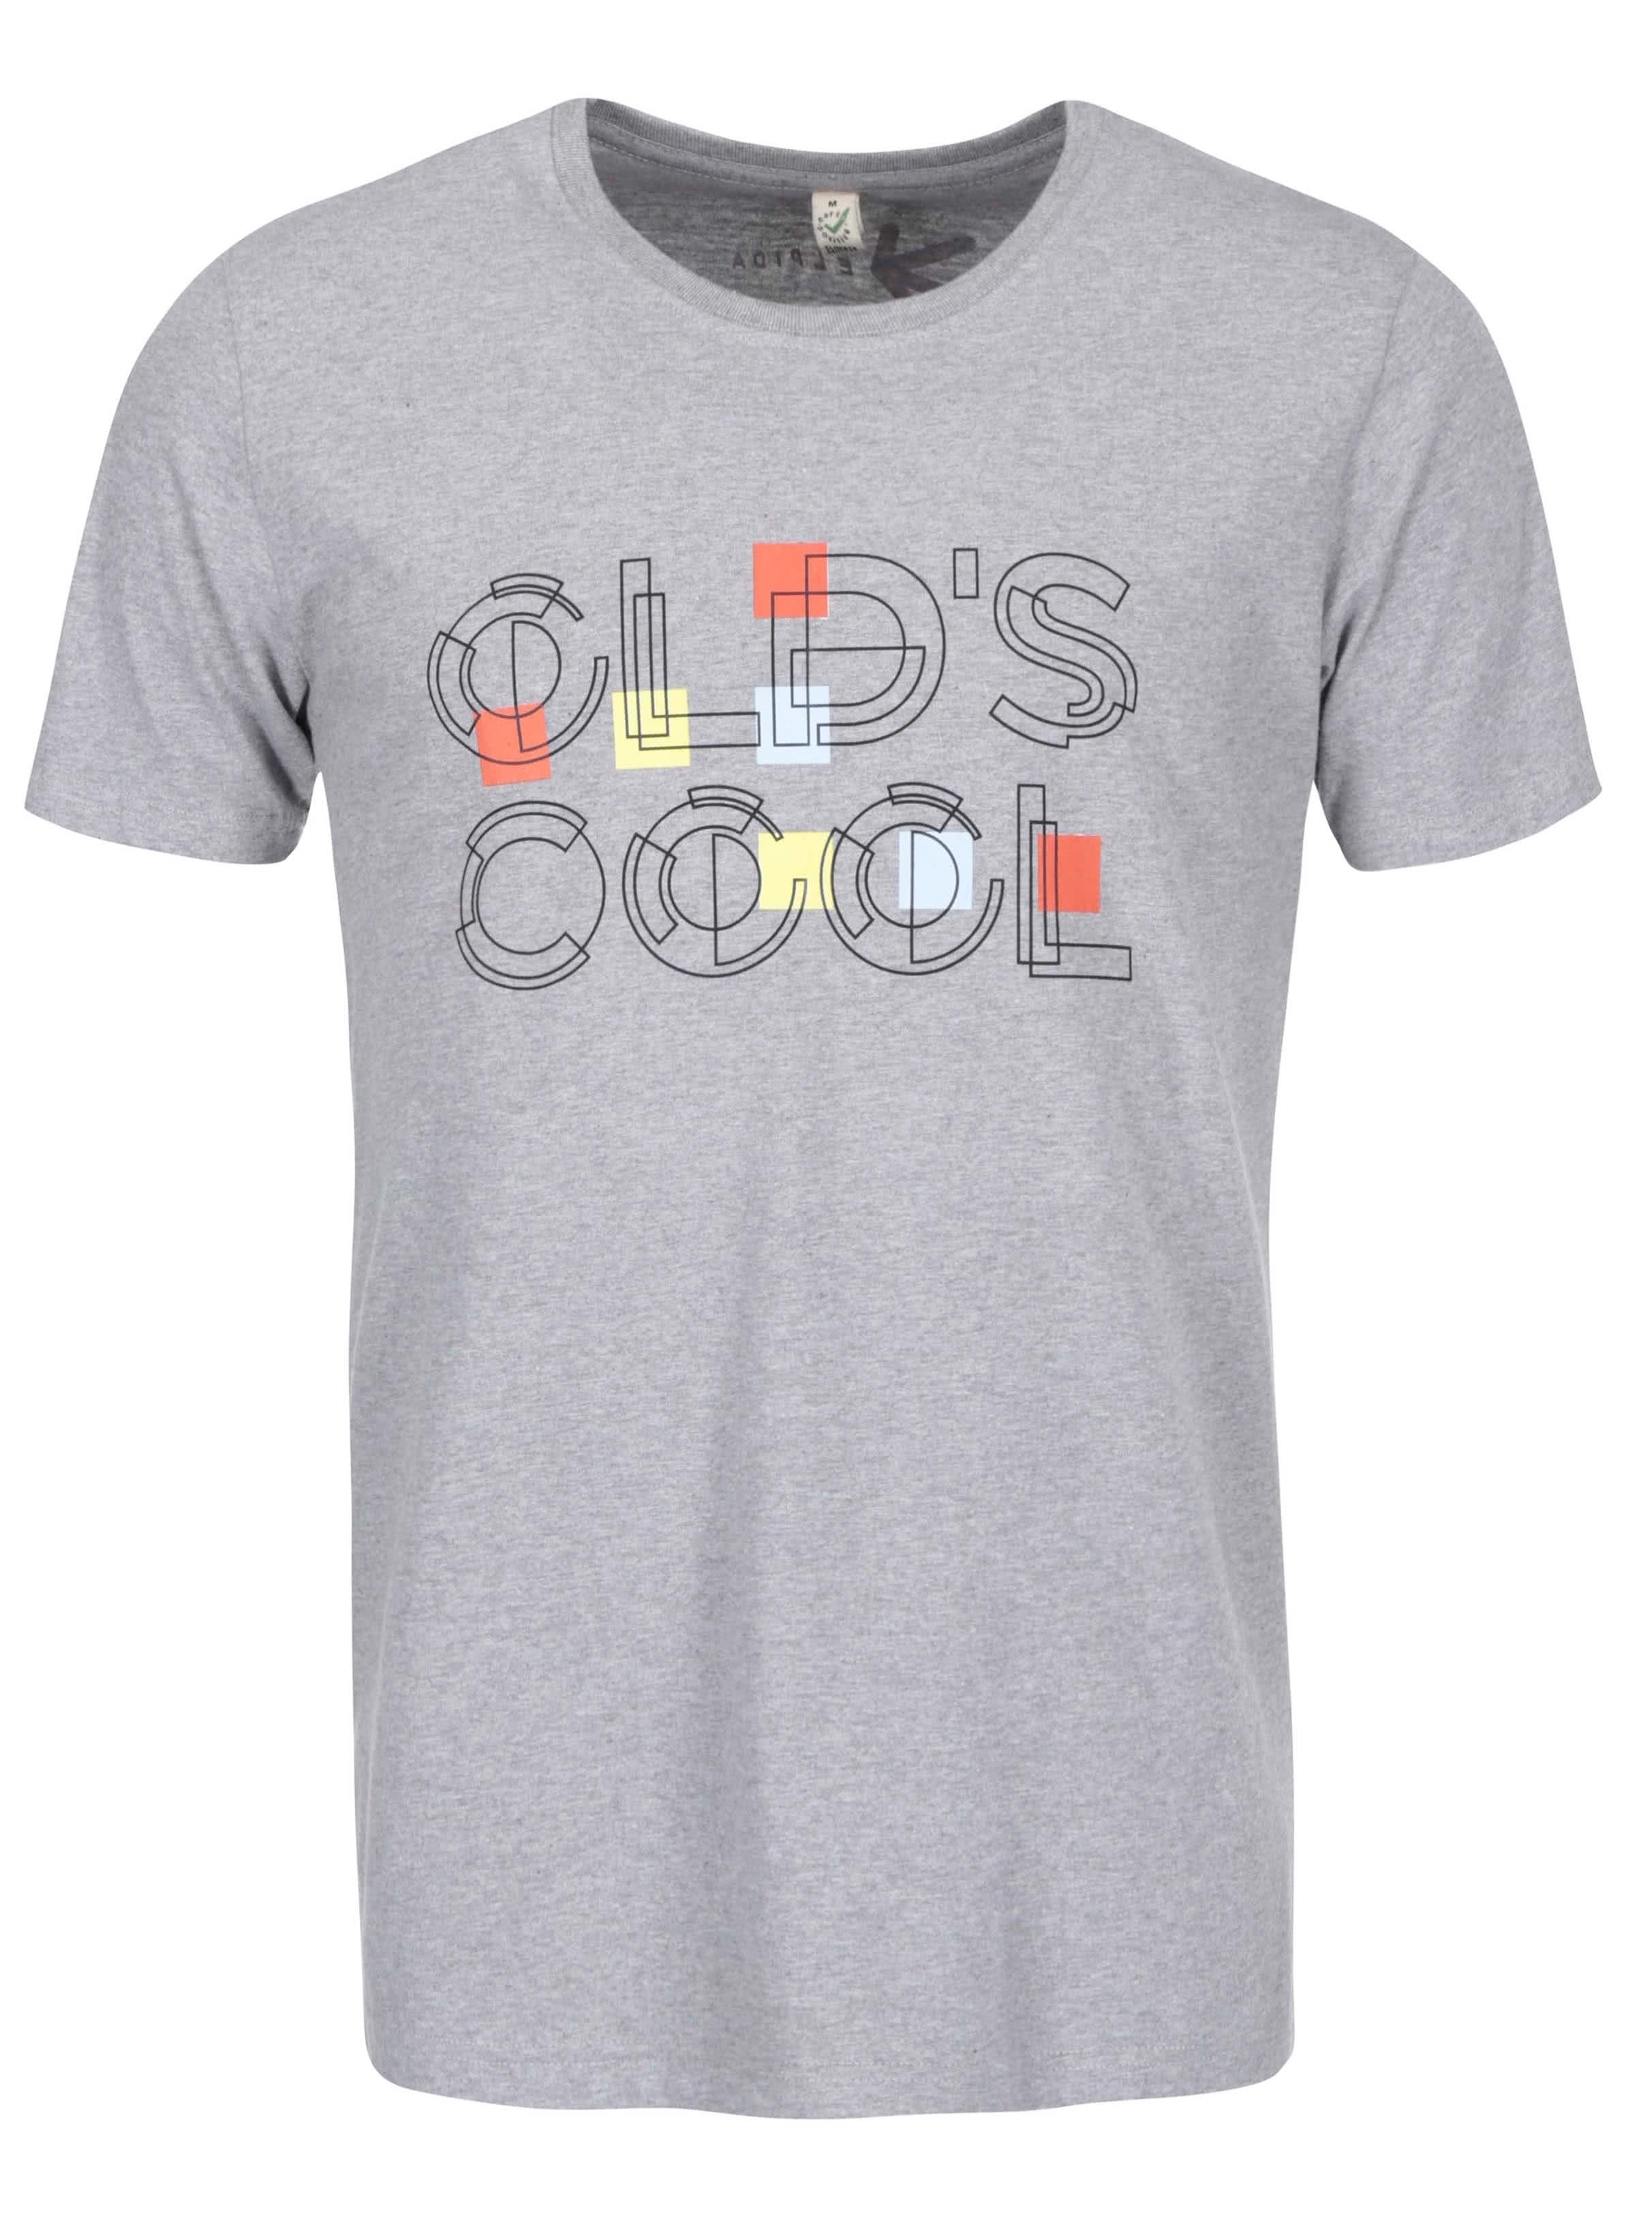 "Dobré" šedé pánské triko Elpida Old´s Cool